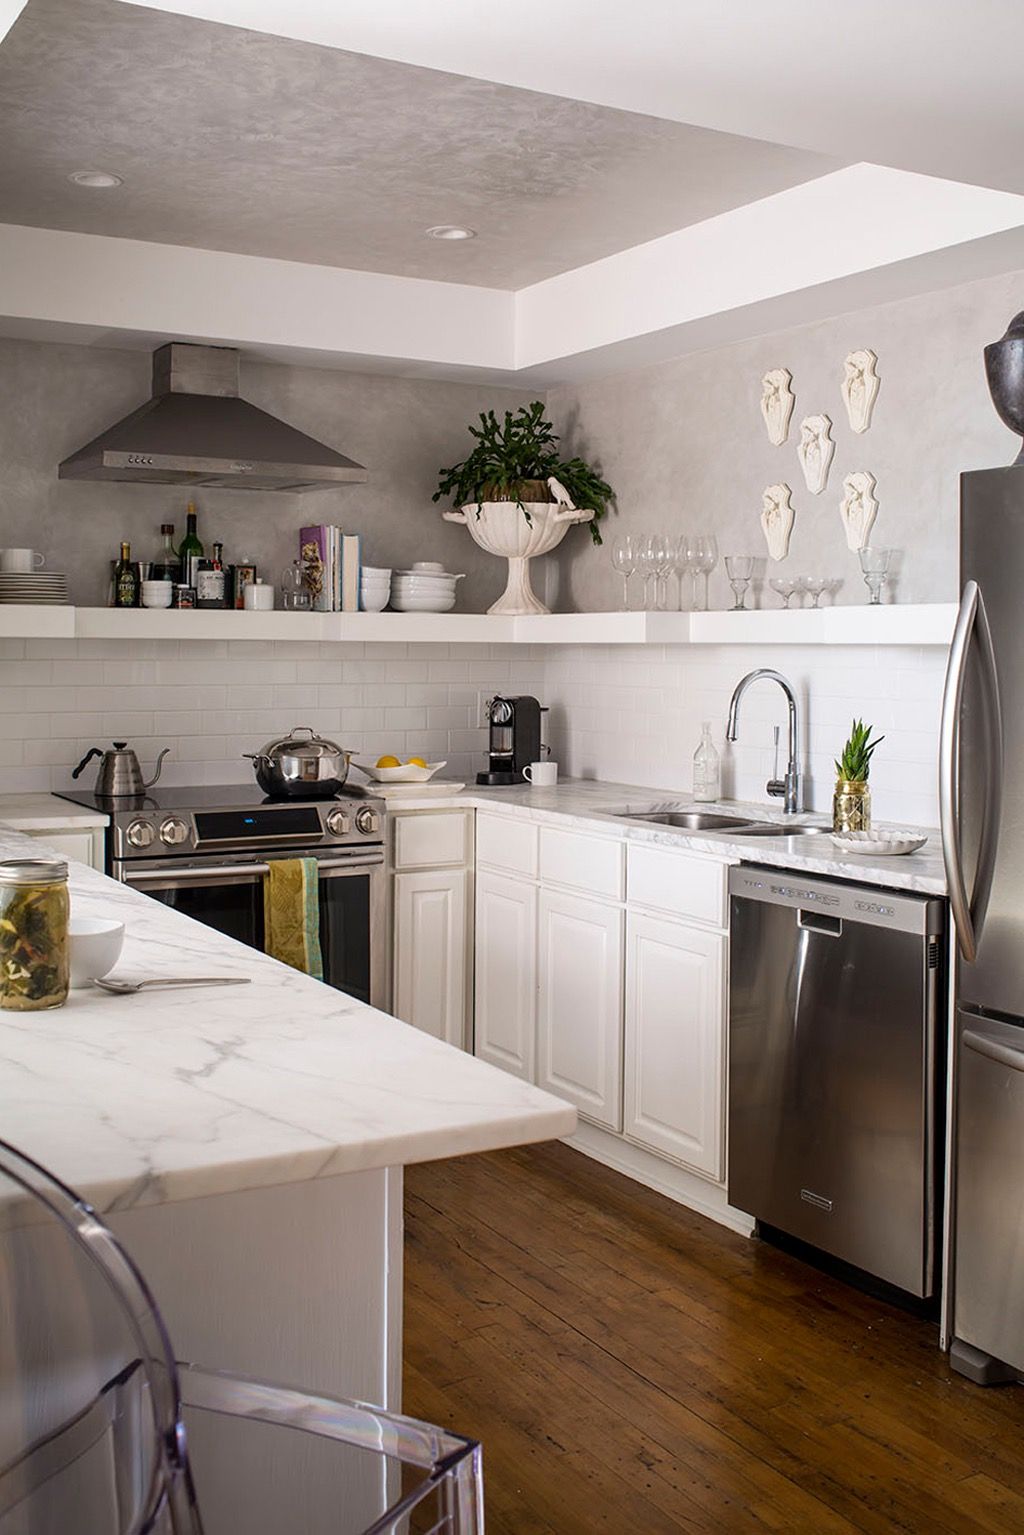 Small-Space Kitchen Interior Decor Tips #17135 | Kitchen Ideas